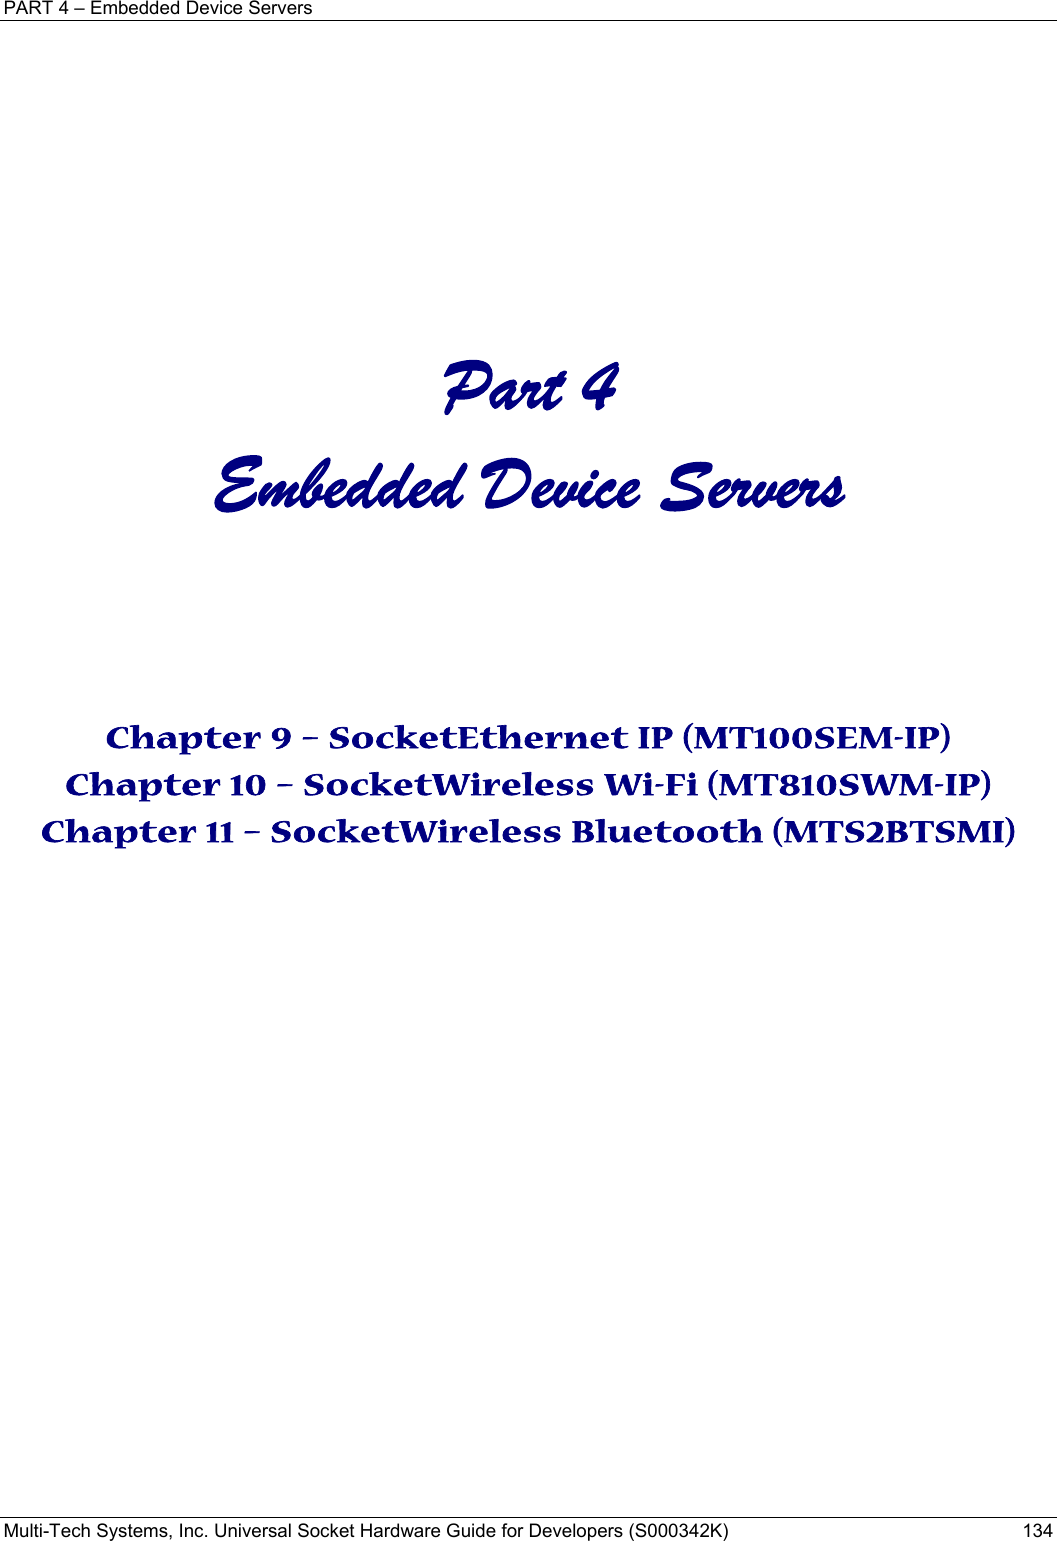 PART 4 – Embedded Device Servers Multi-Tech Systems, Inc. Universal Socket Hardware Guide for Developers (S000342K)  134           Part 4 Embedded Device Servers    Chapter 9 – SocketEthernet IP (MT100SEM-IP) Chapter 10 – SocketWireless Wi-Fi (MT810SWM-IP) Chapter 11 – SocketWireless Bluetooth (MTS2BTSMI)    